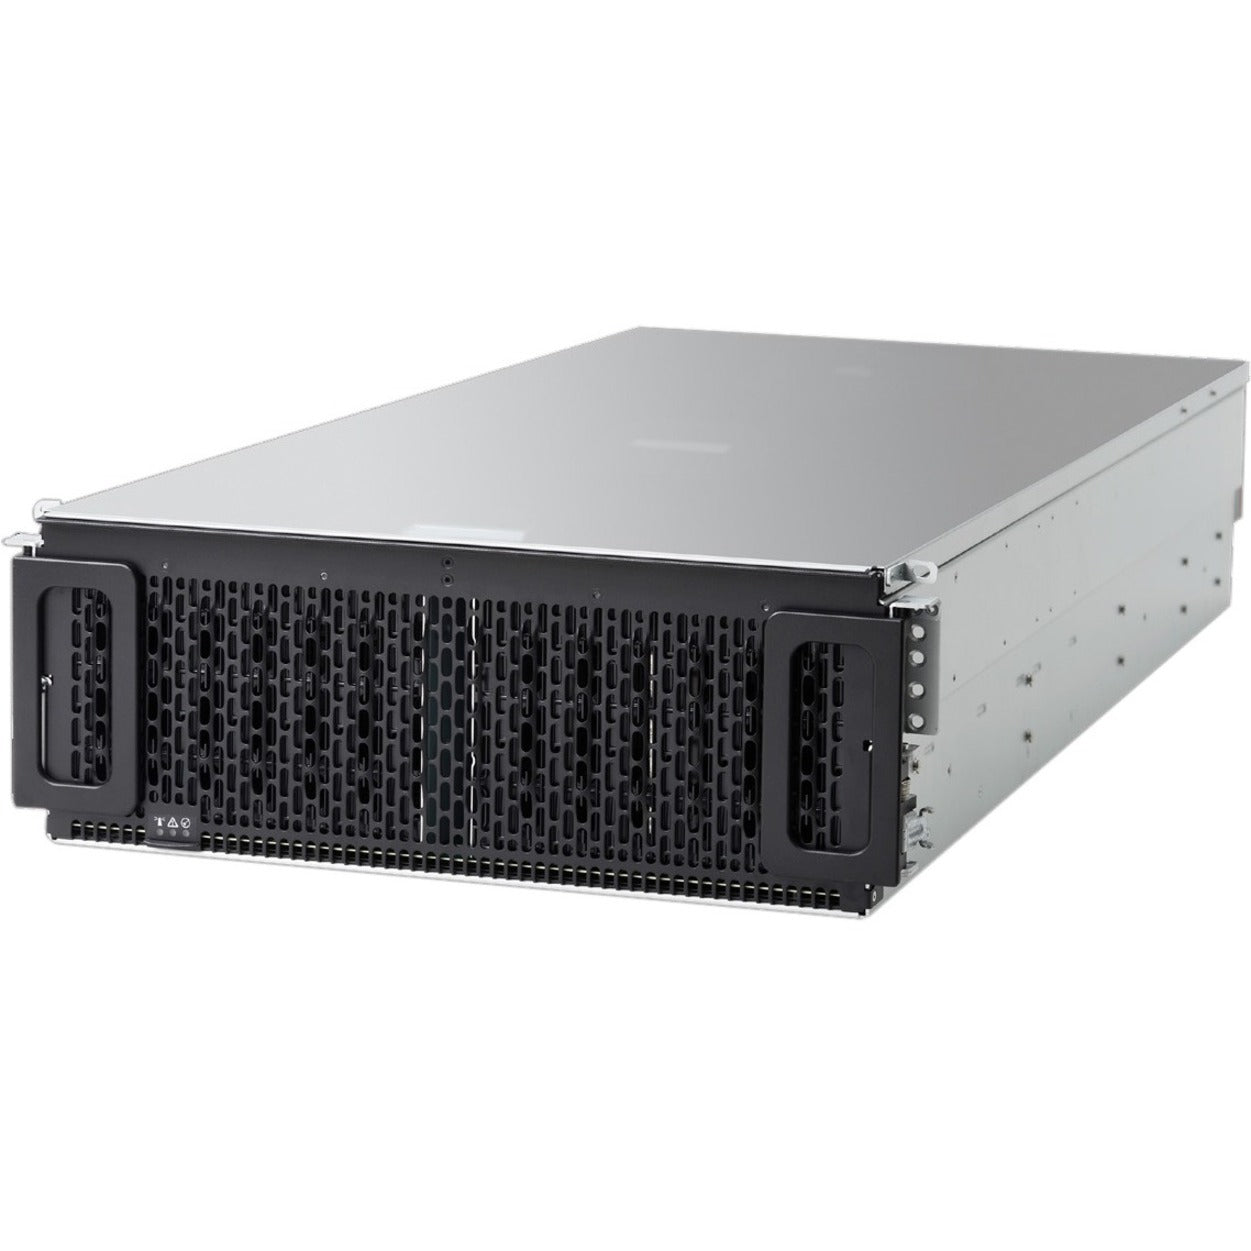 HGST 1ES1861 SE4U102-102 Ultrastar Data102 102-Bay Hybrid Storage Platform, 1632TB Capacity, 12Gb/s SAS Host Interface